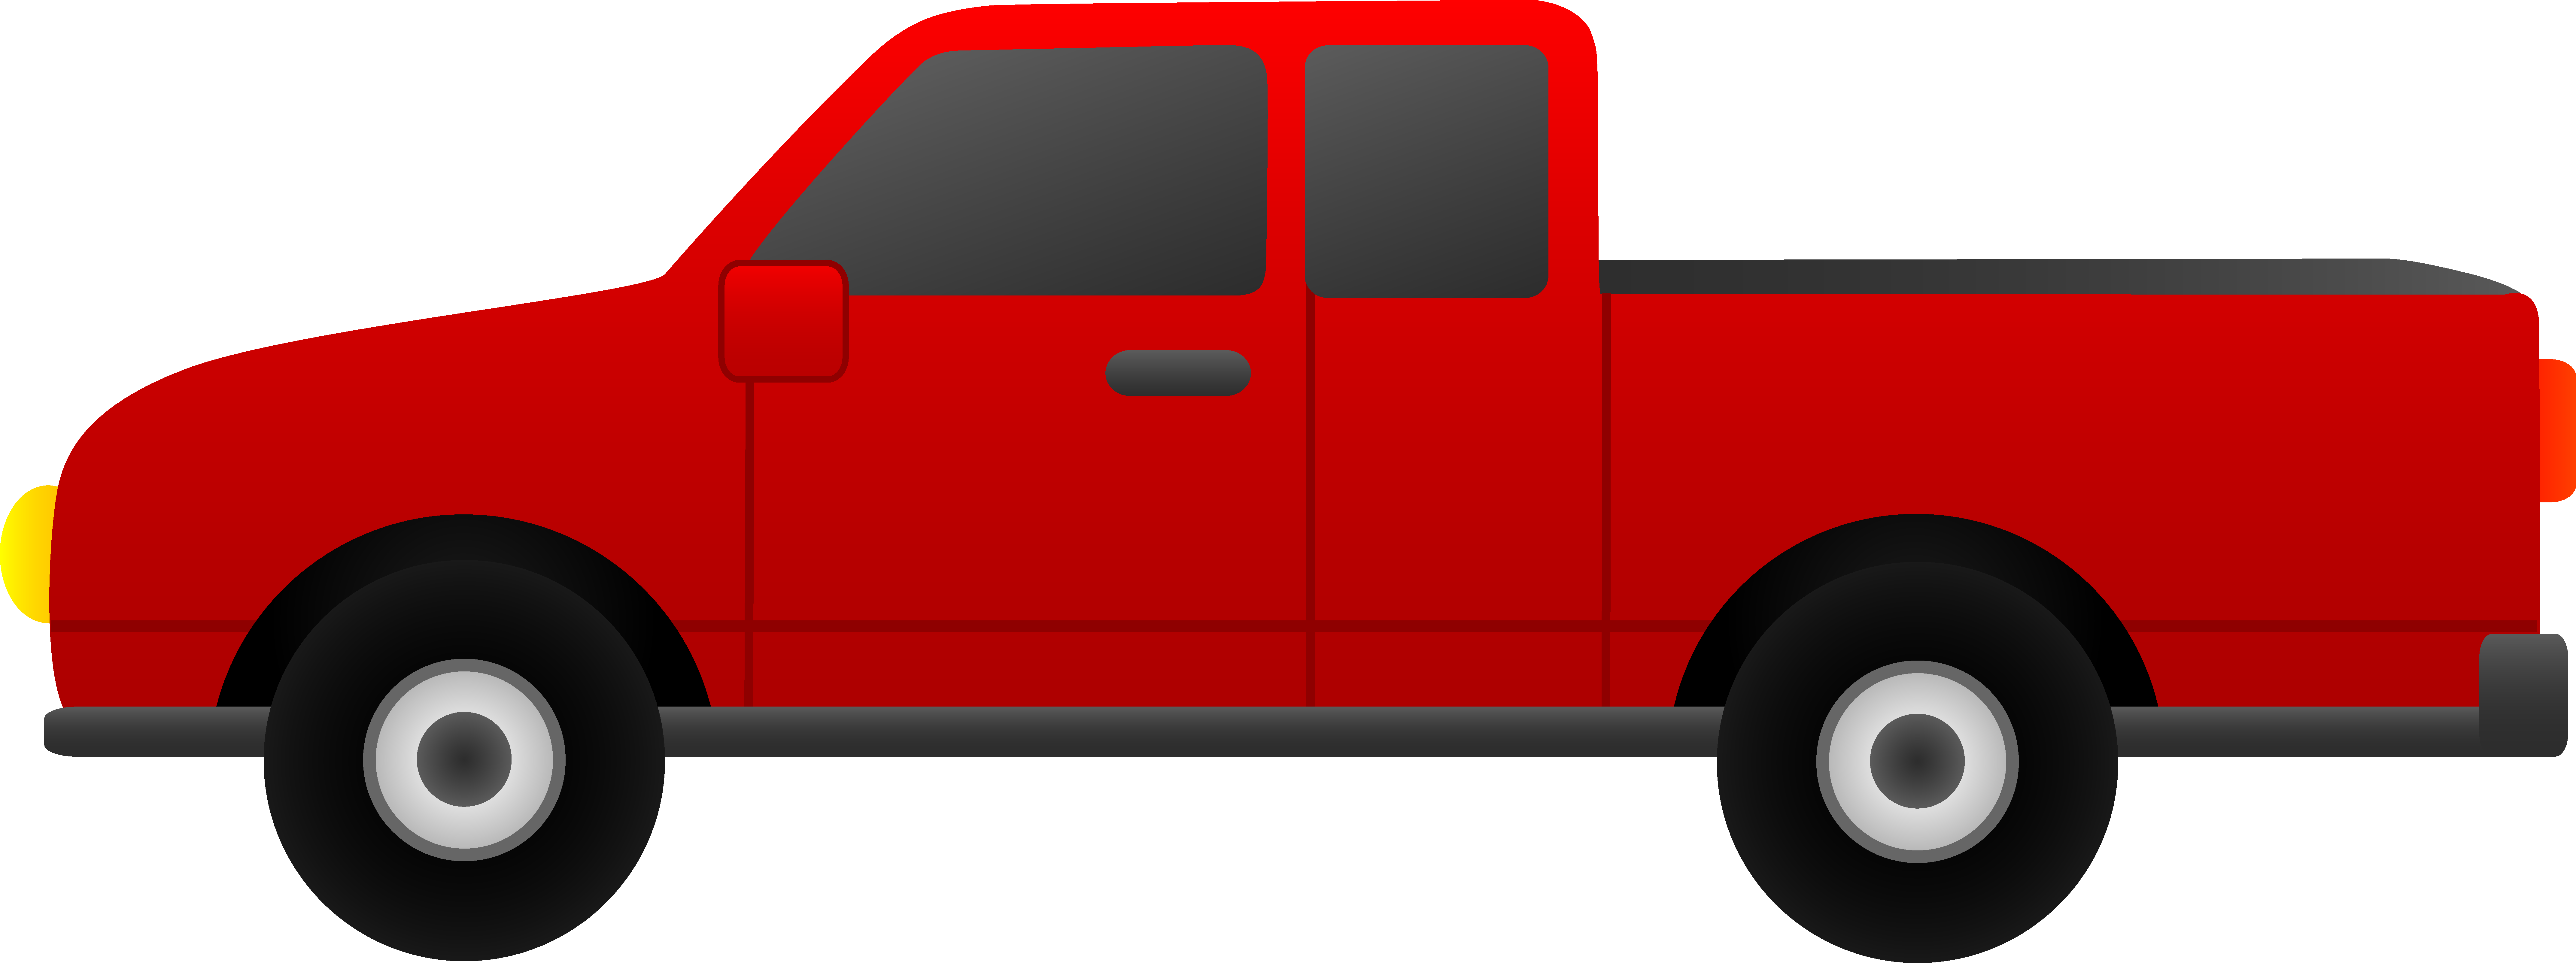 Truck Image Clip Art